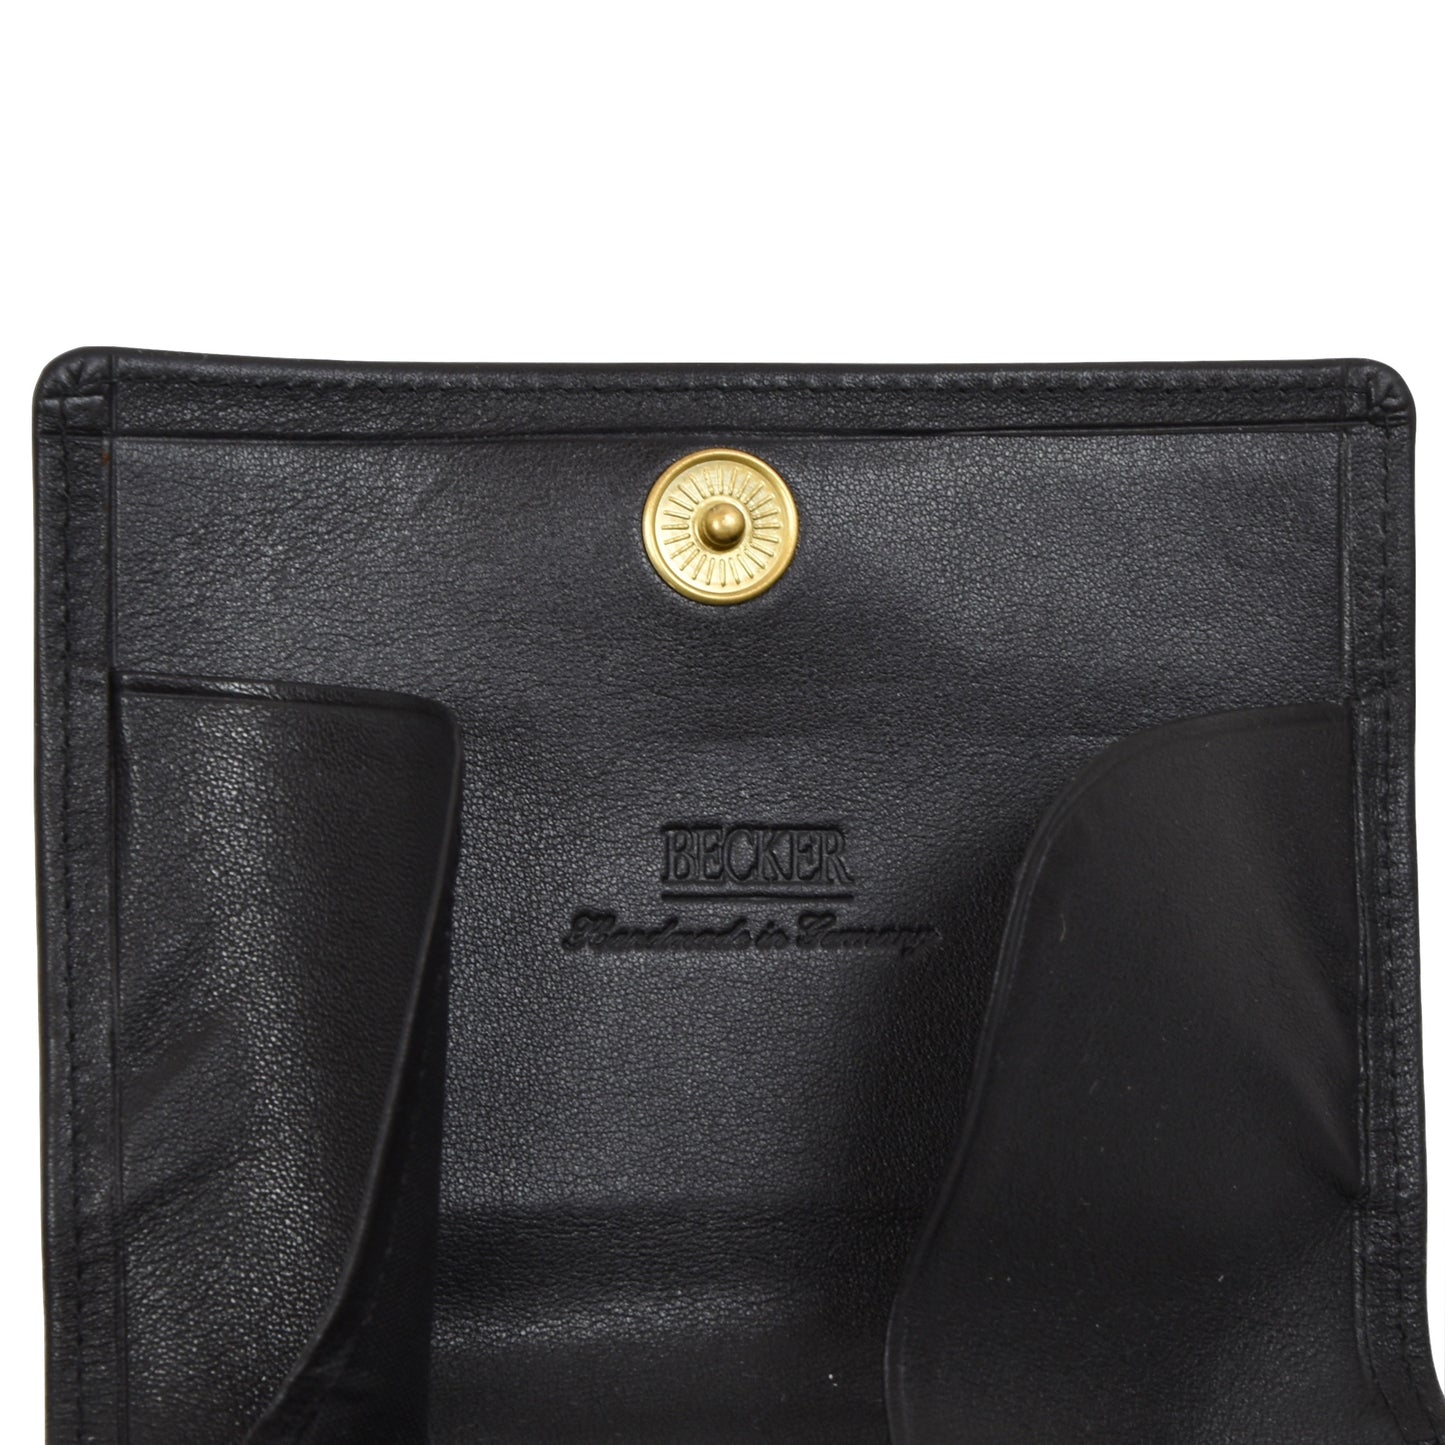 Becker Handmade Leather Wallet - Black